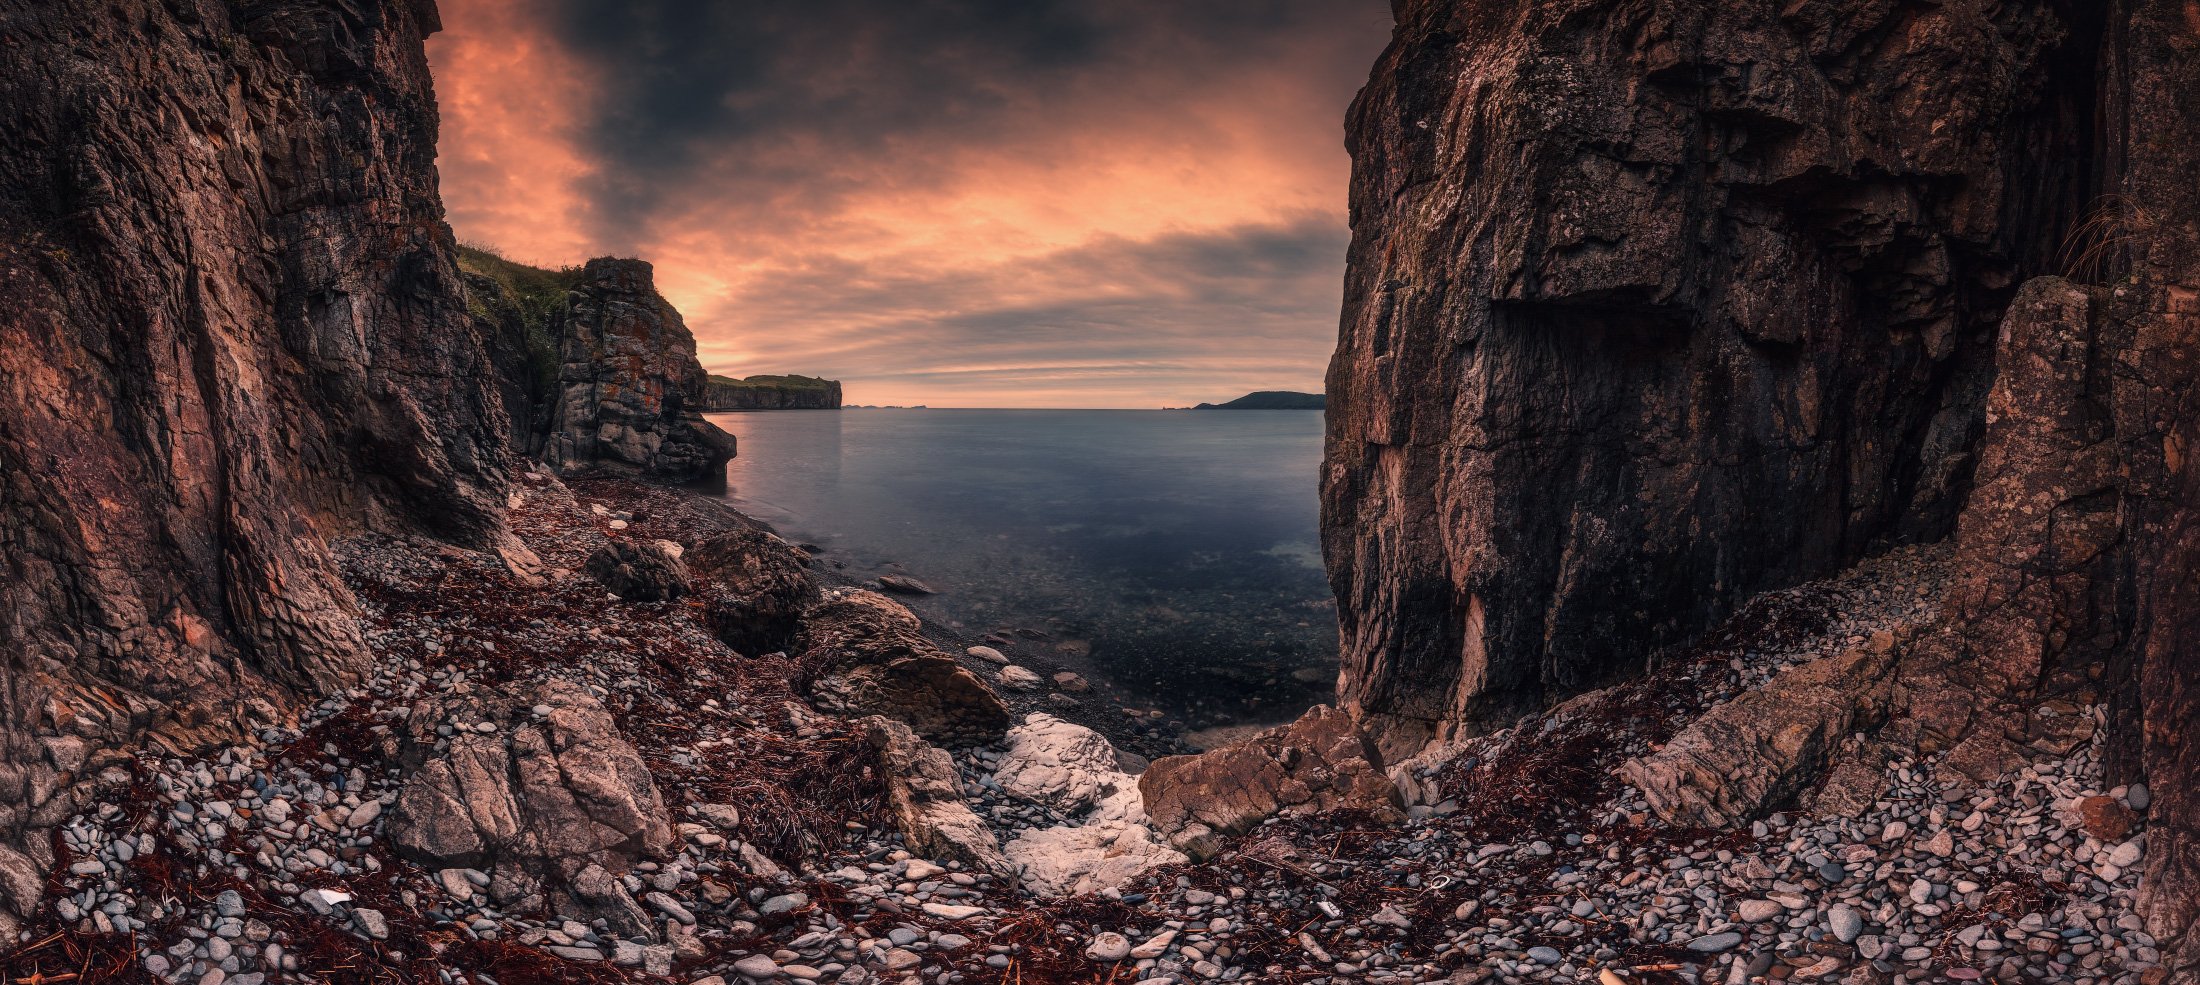 панорама, утро, скалы, камни, Андрей Кровлин